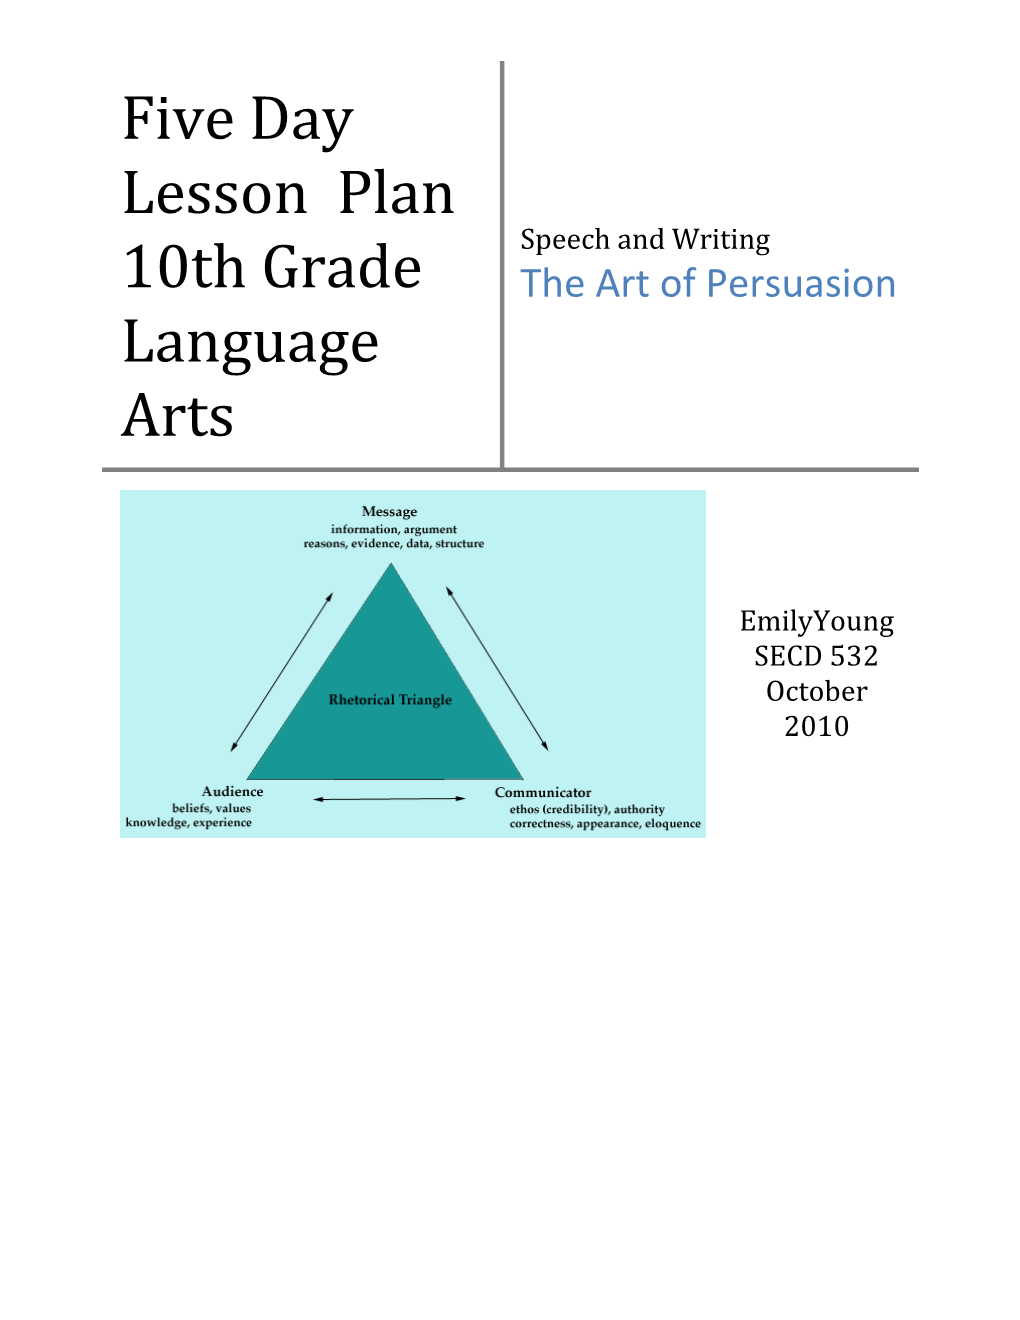 Five Day Lesson Plan 10Th Grade Language Arts